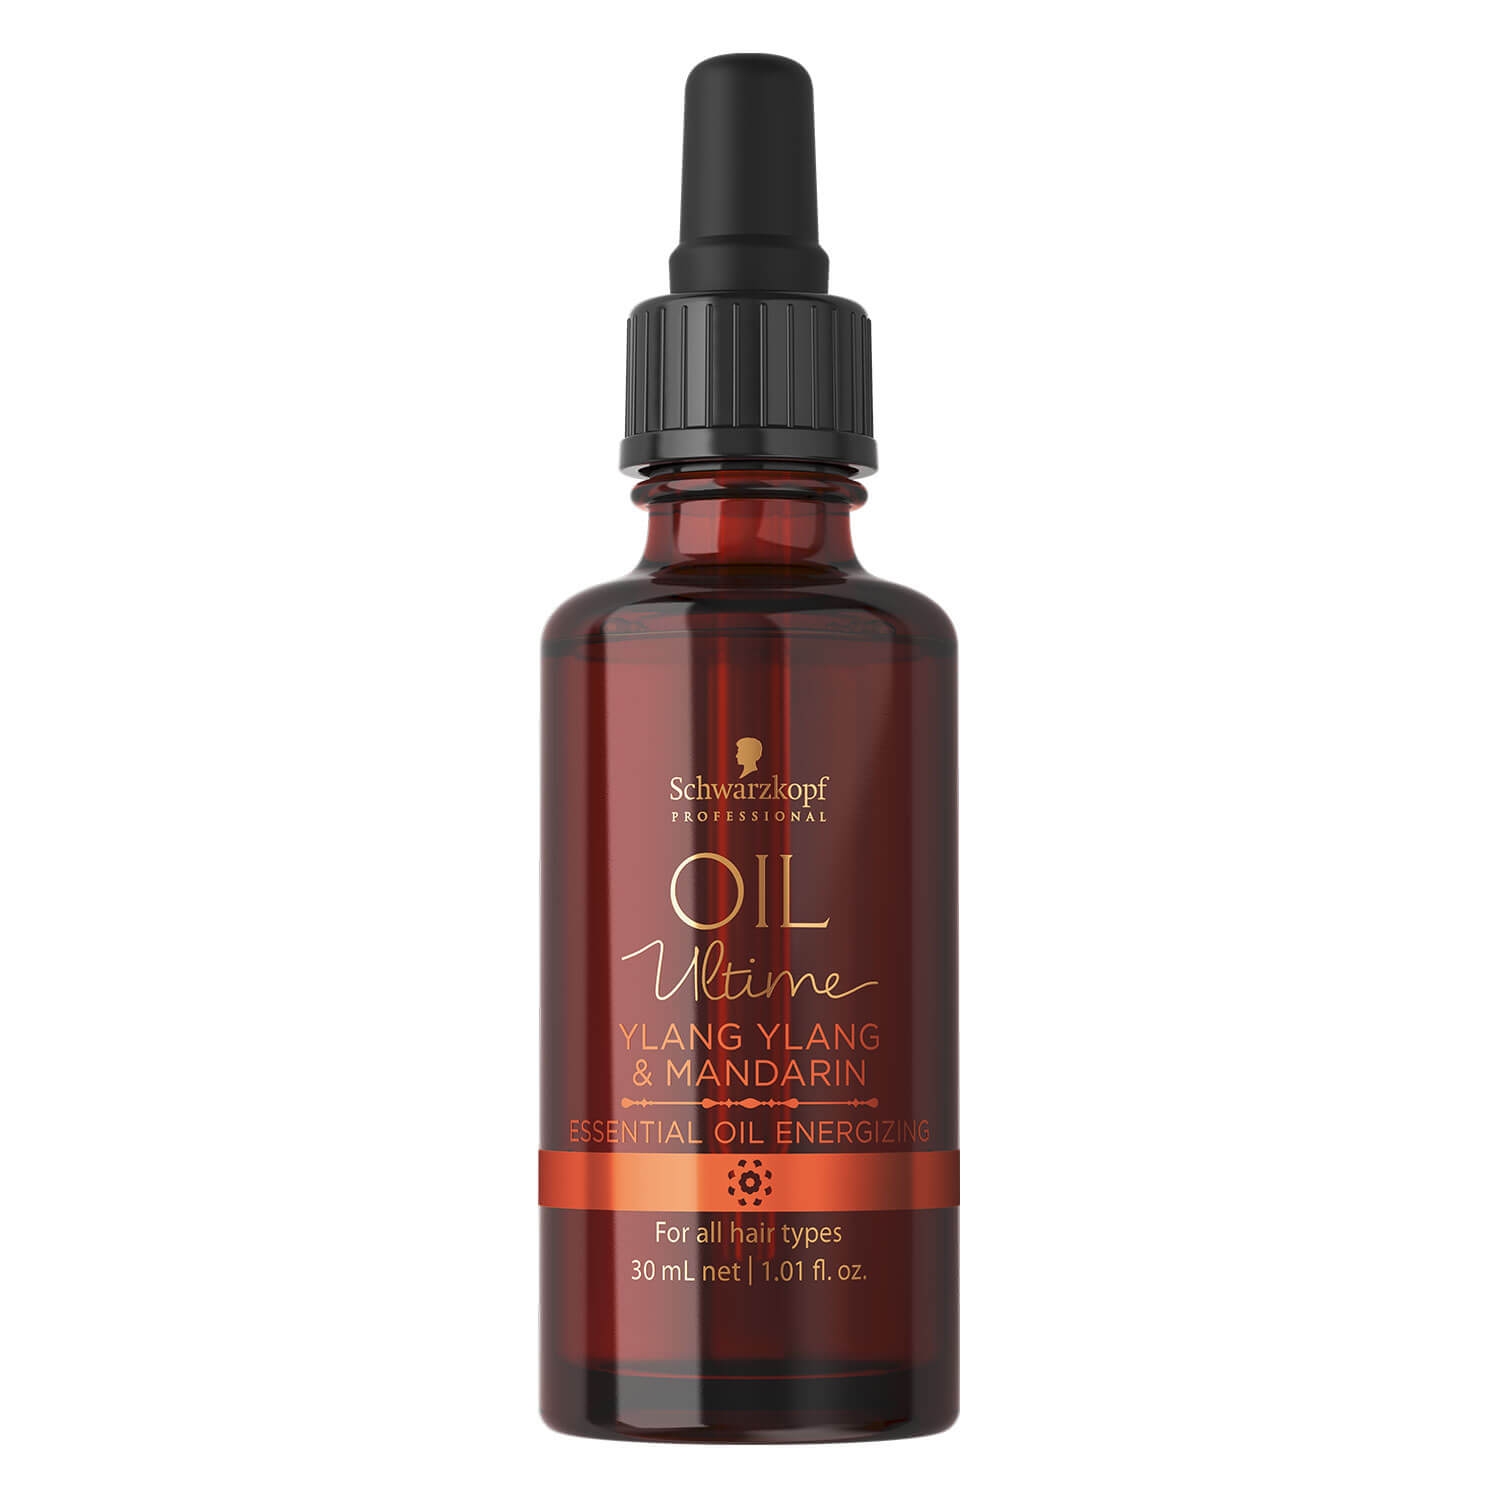 Produktbild von Oil Ultime - Essential Oil Energizing Ylang Ylang & Mandarin Silicone-free